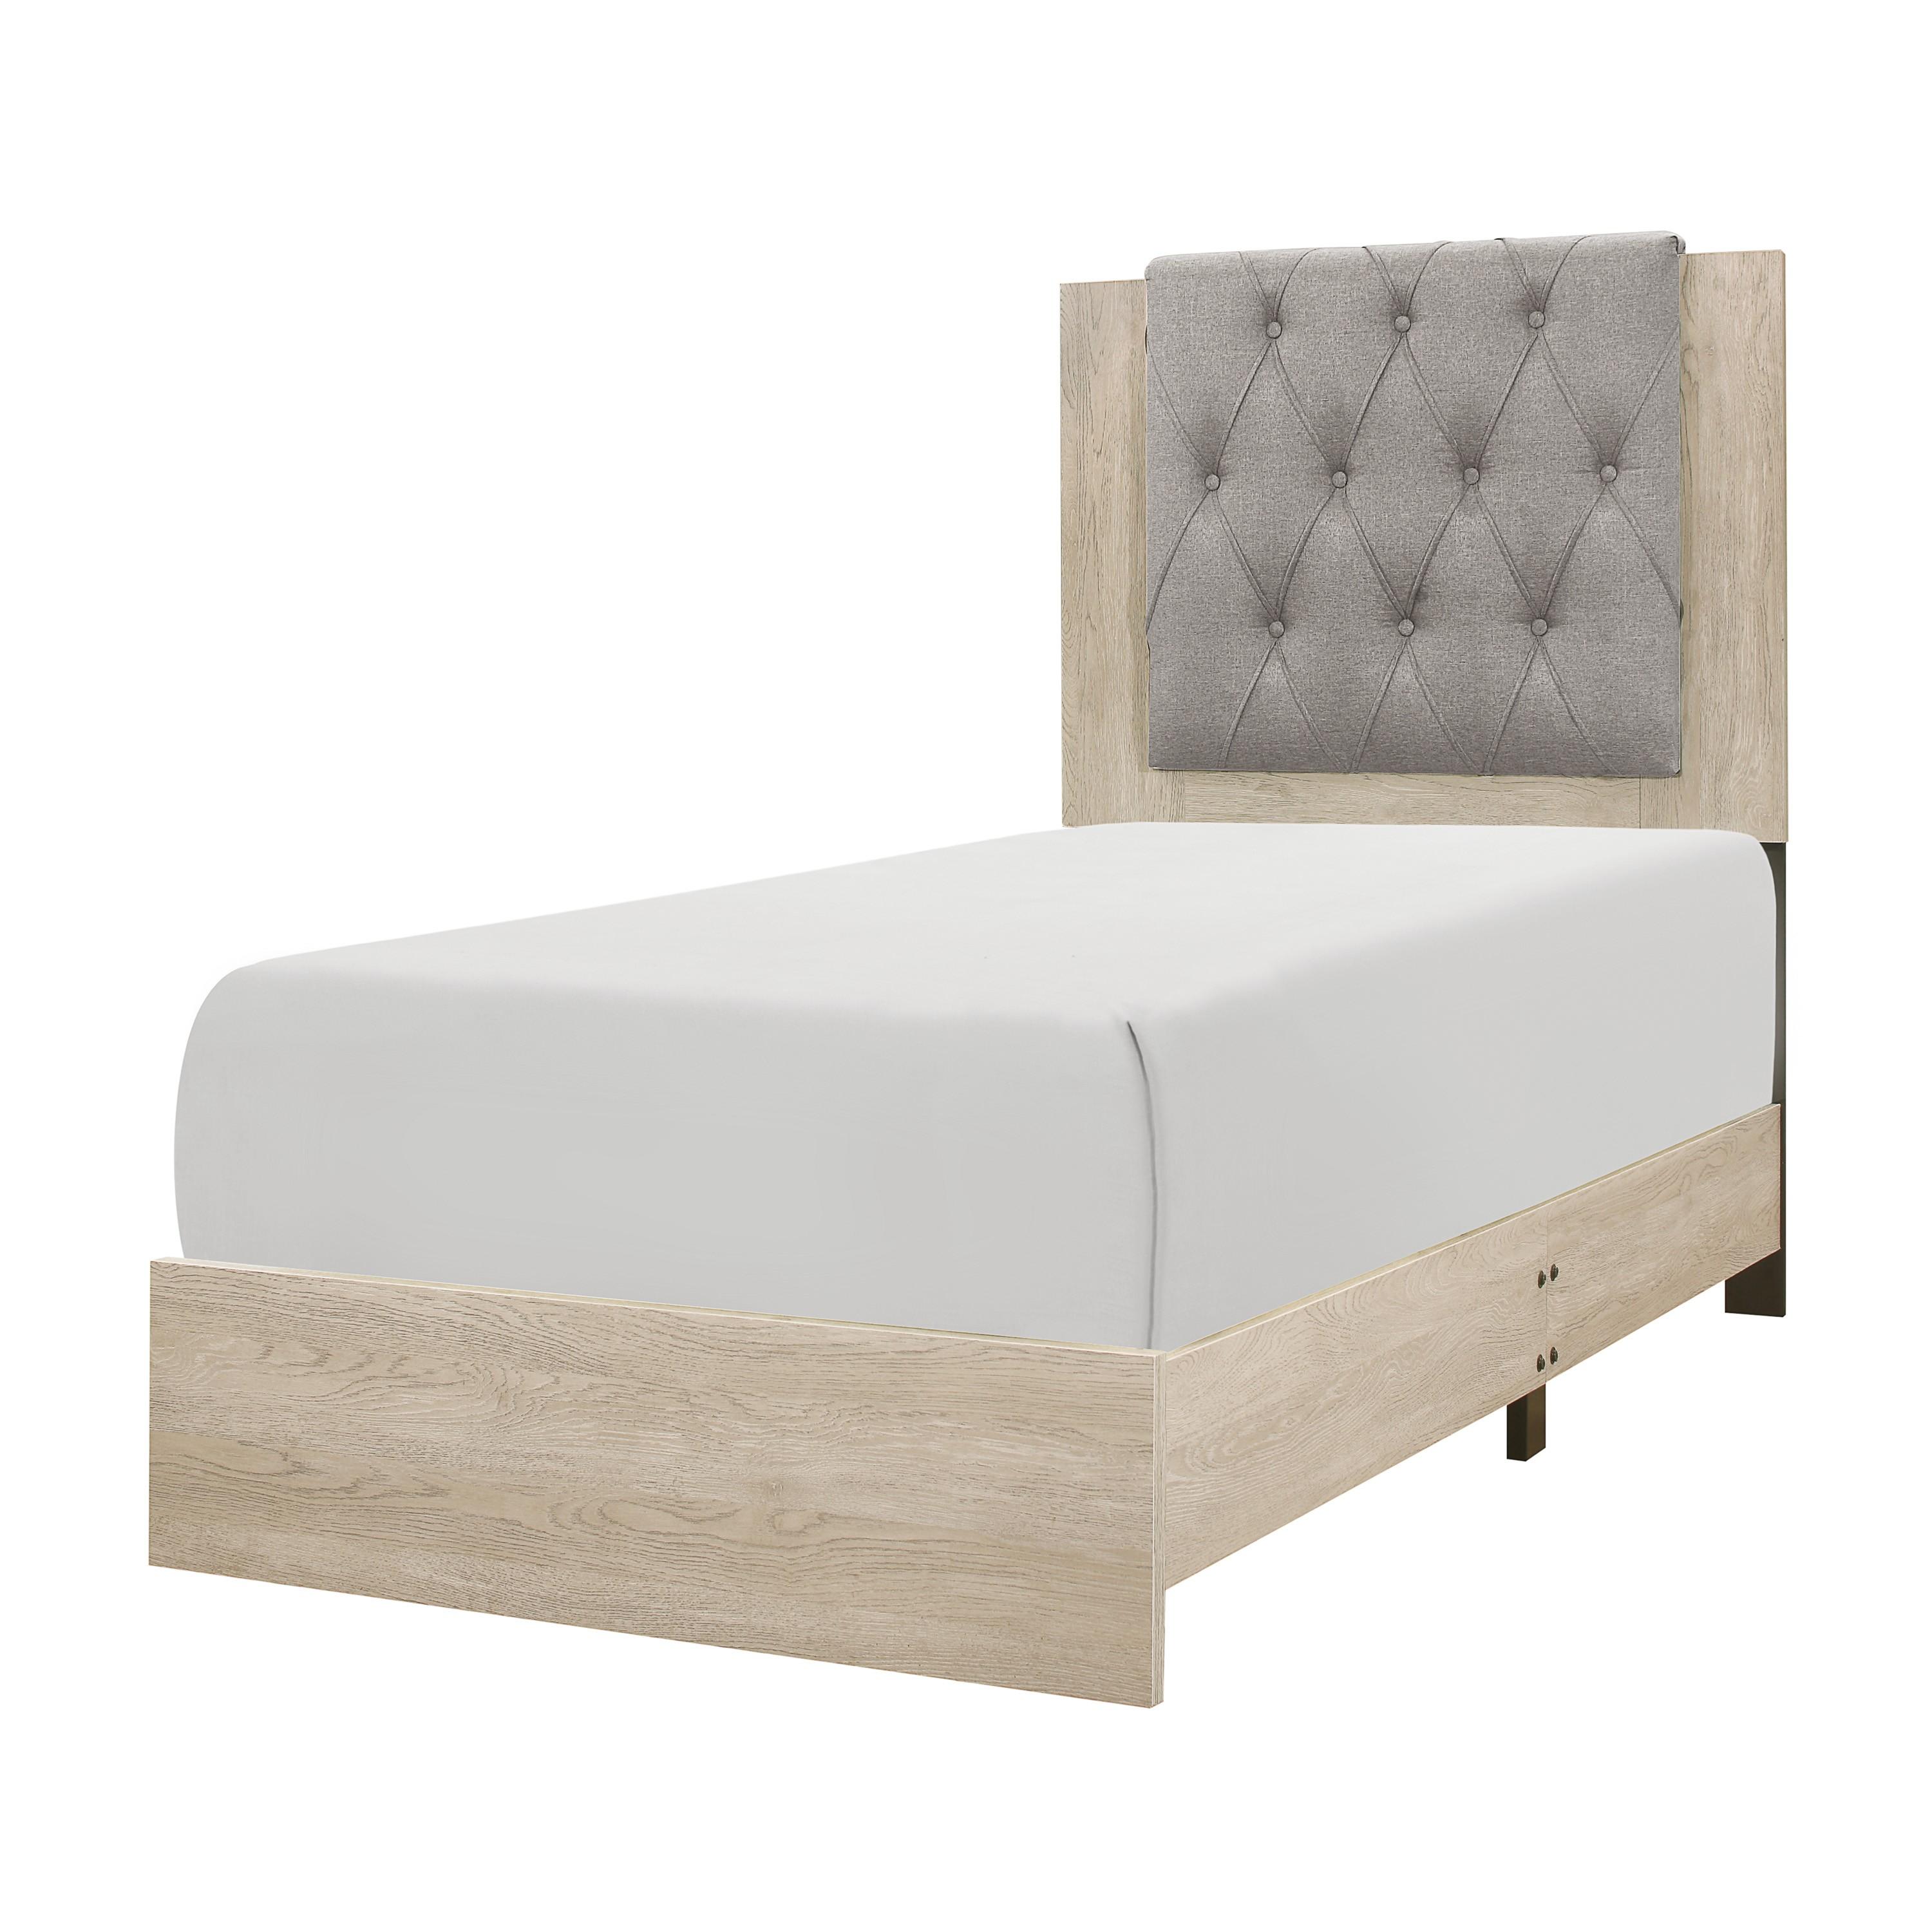 

    
Modern Cream Wood Twin Bedroom Set 5pcs Homelegance 1524T-1 Whiting
